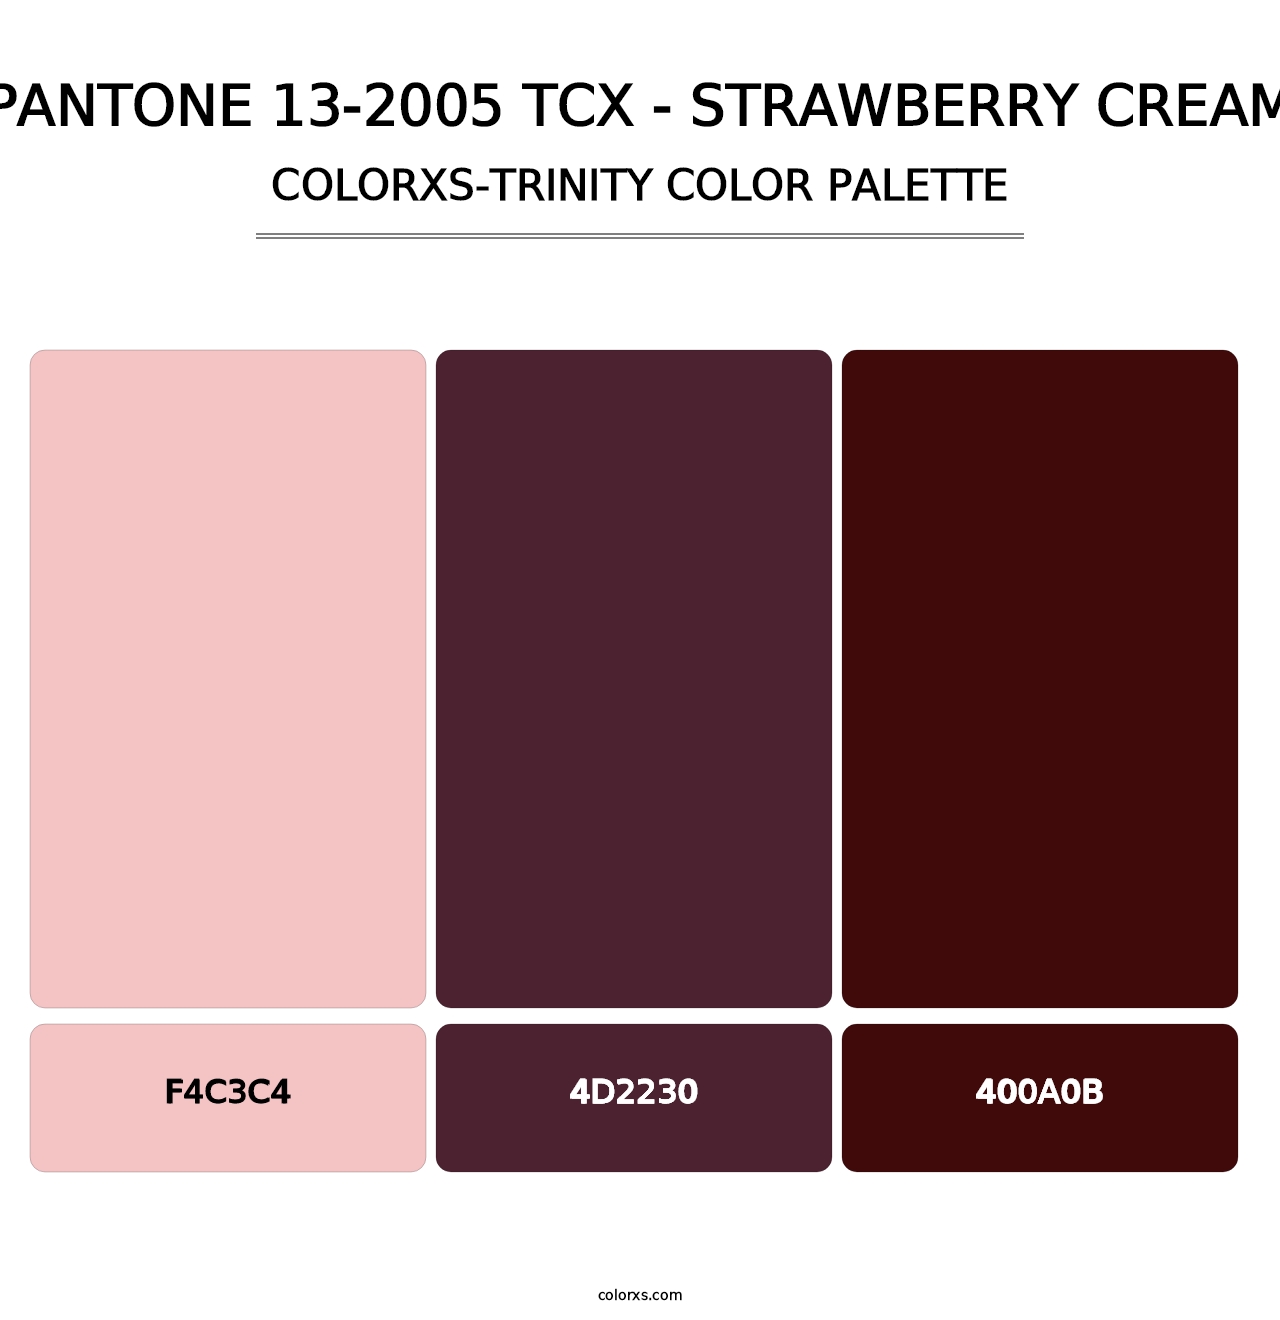 PANTONE 13-2005 TCX - Strawberry Cream - Colorxs Trinity Palette